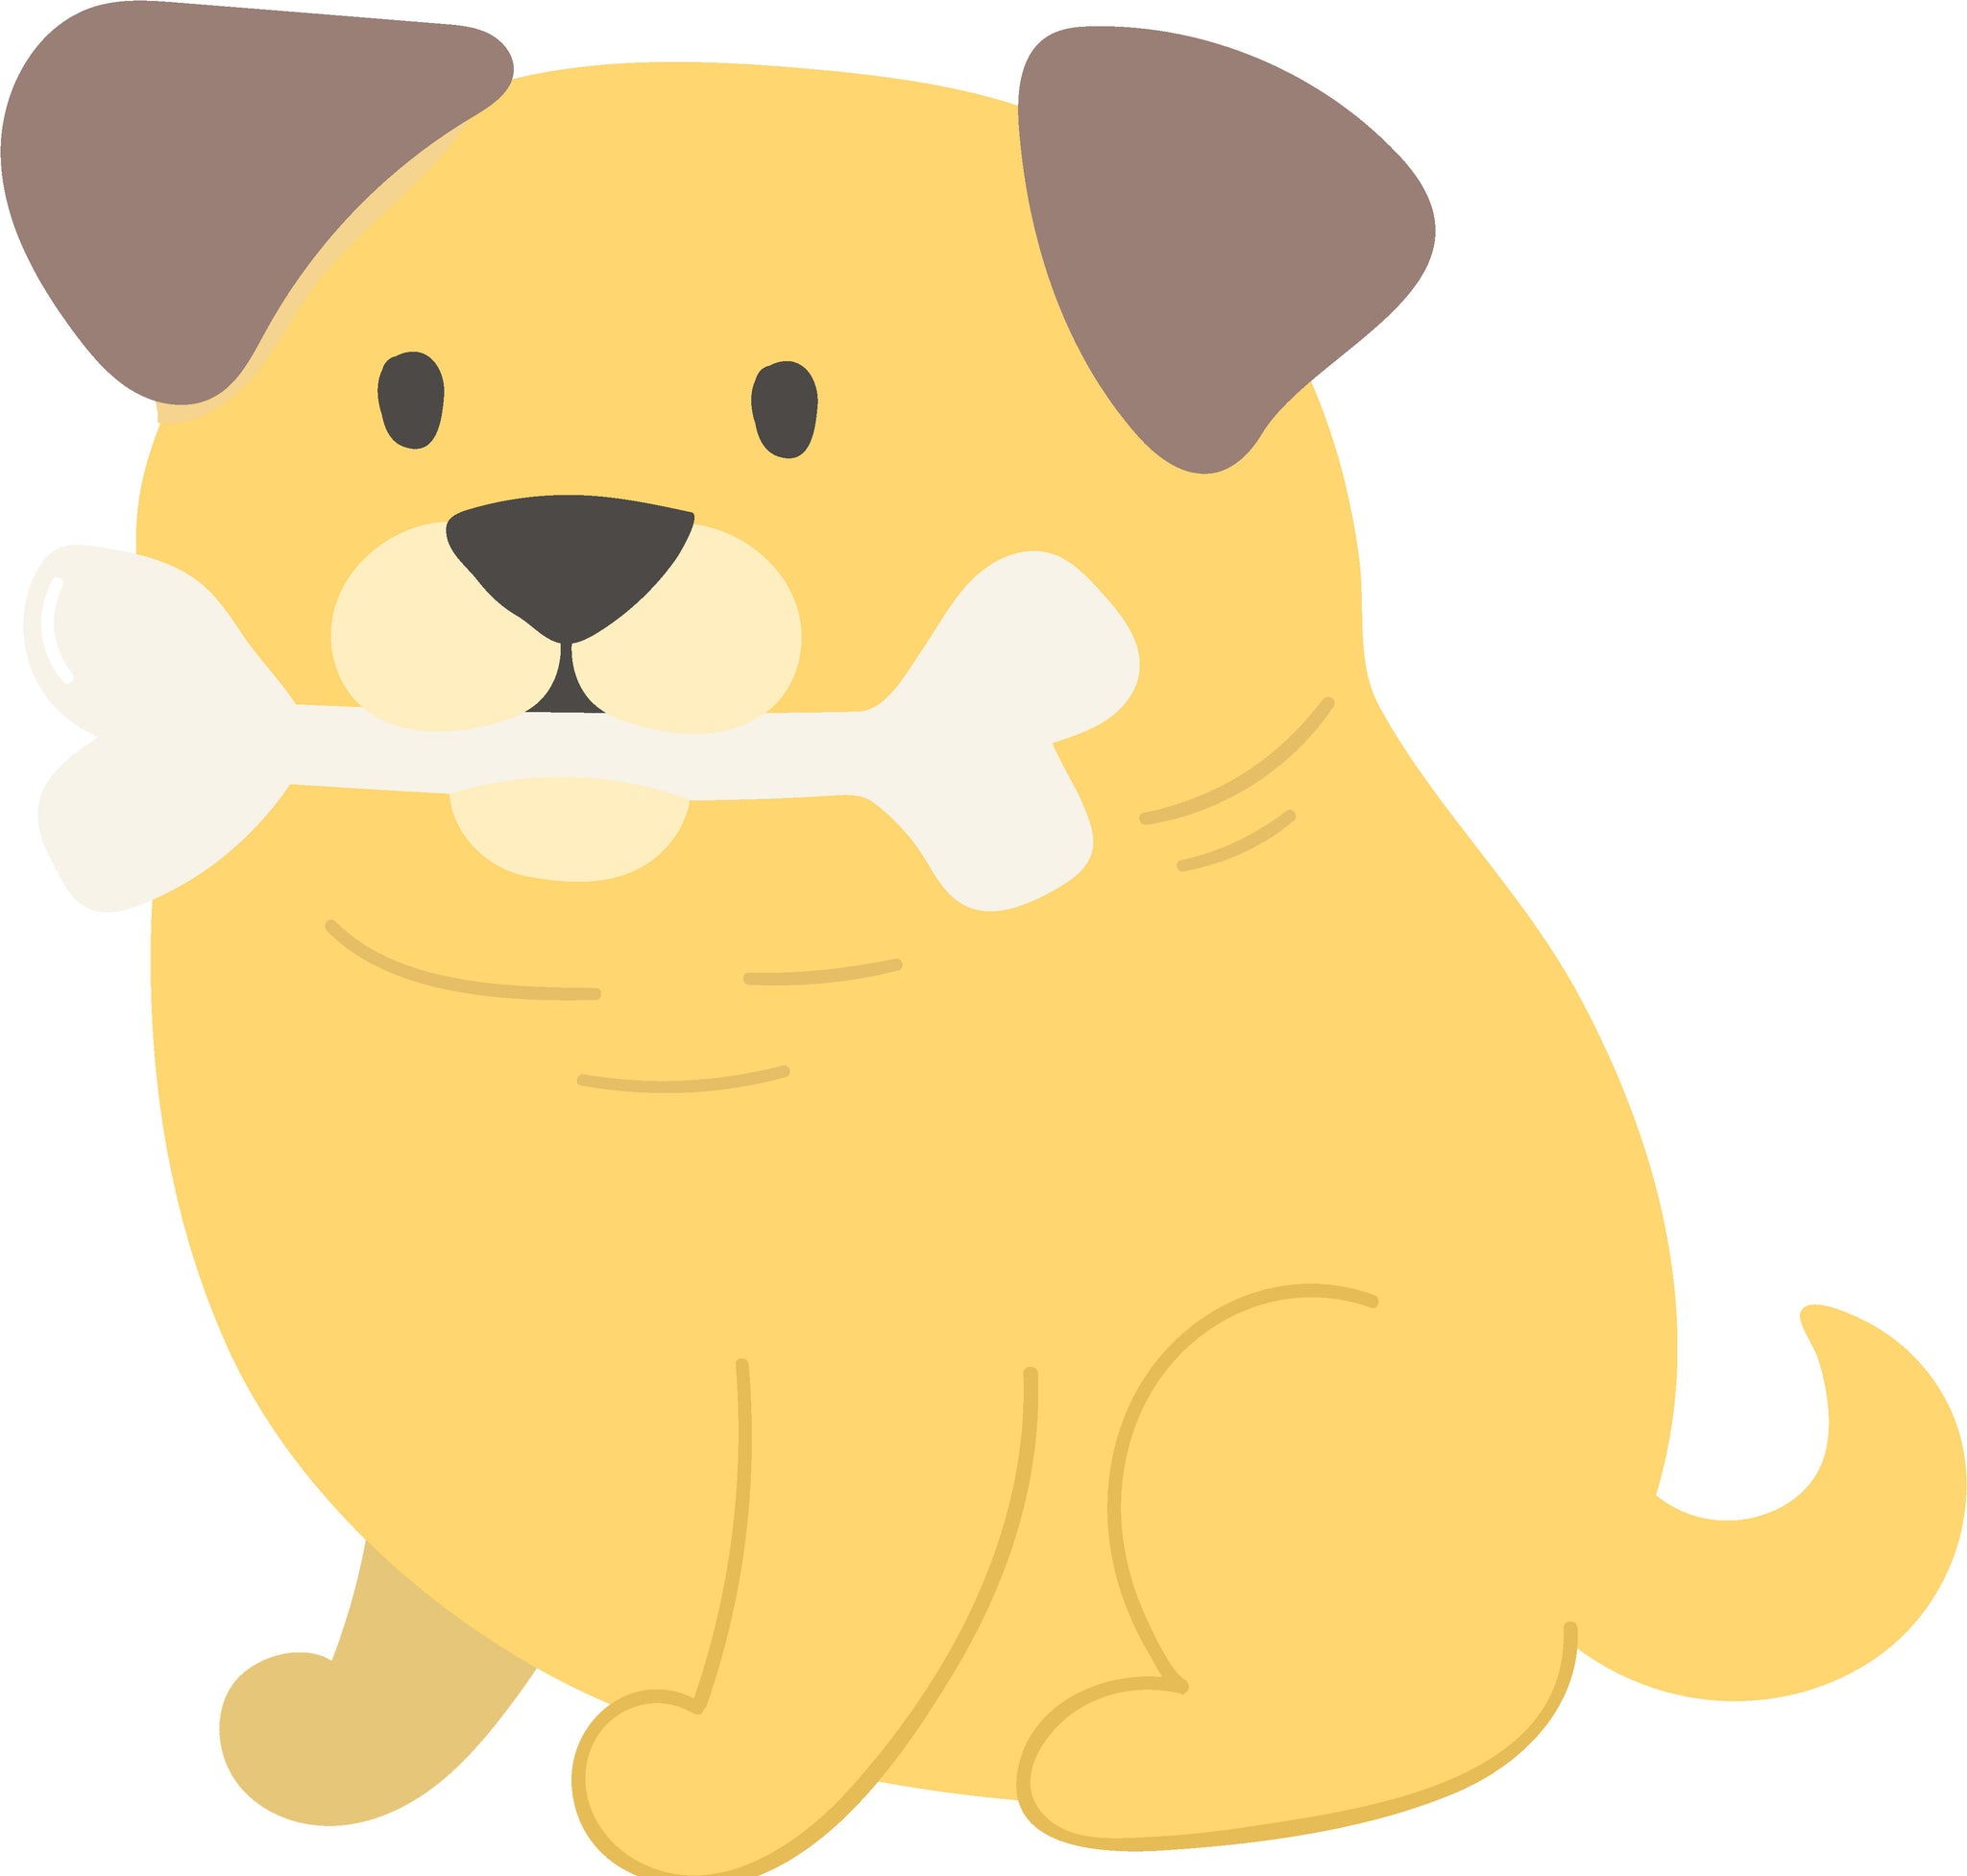 Adorable Cute Playful Puppy Dog Cartoon Emoji #2 Vinyl Decal Sticker